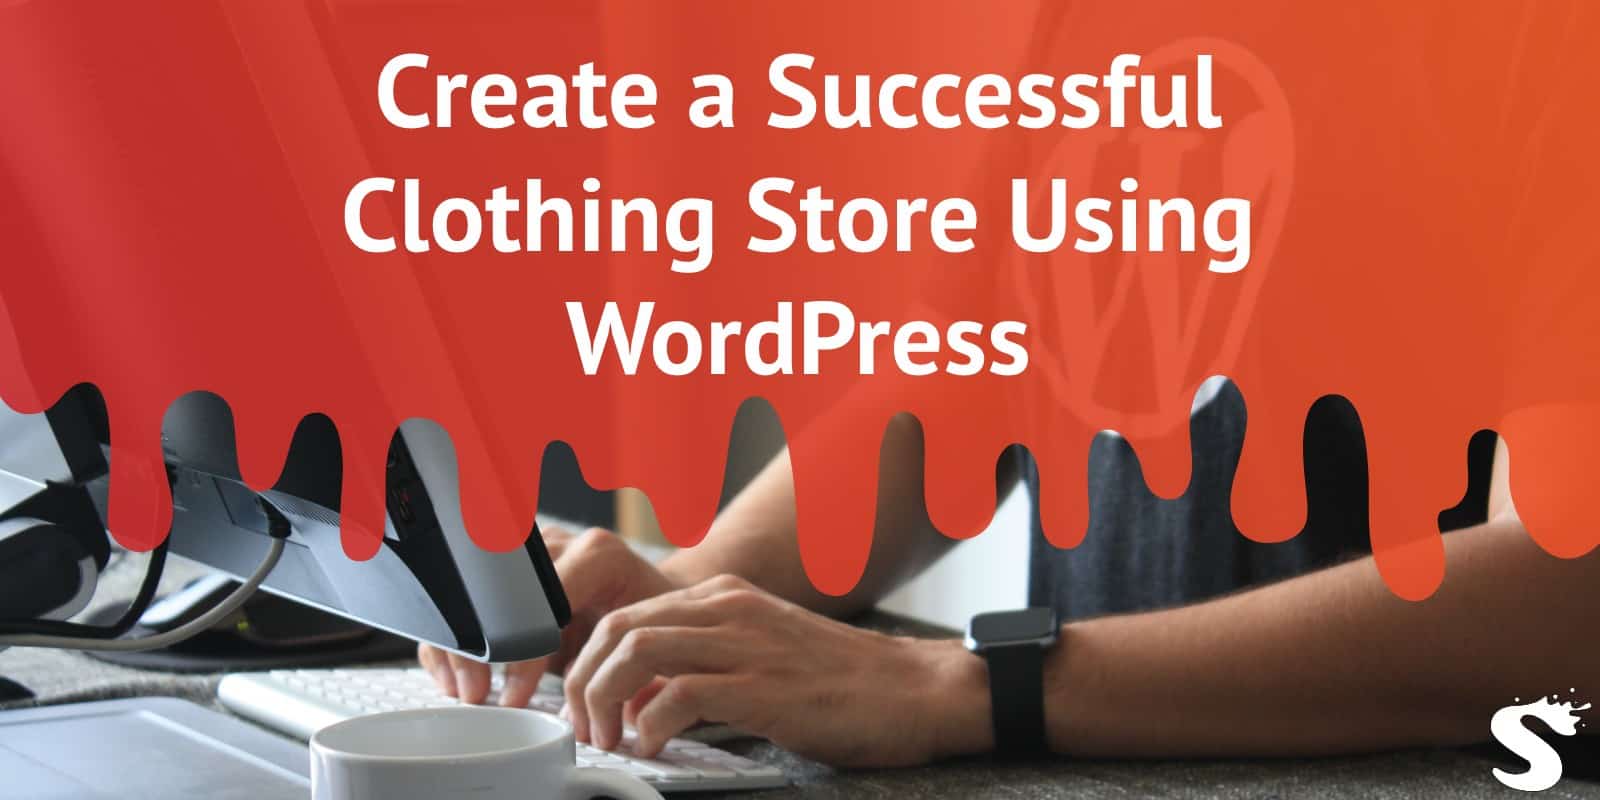 Create a Successful Clothing Store Using WordPress